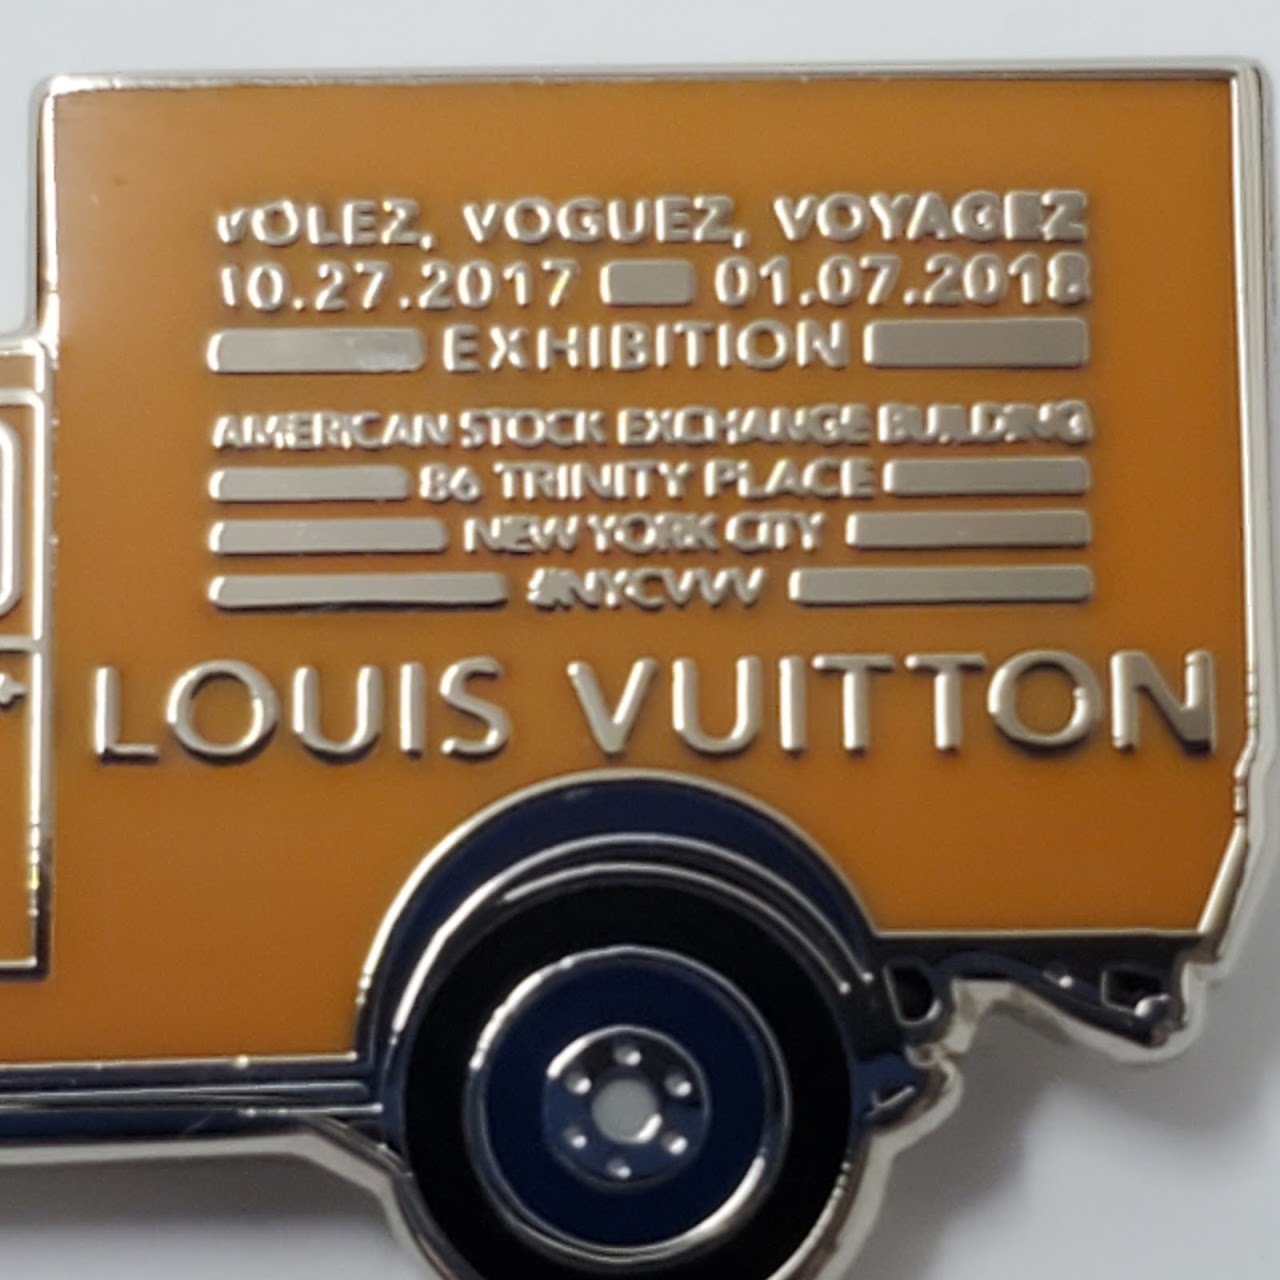 LOUIS VUITTON Exhibit NYC Truck & Plane Art Pins! Pintrill